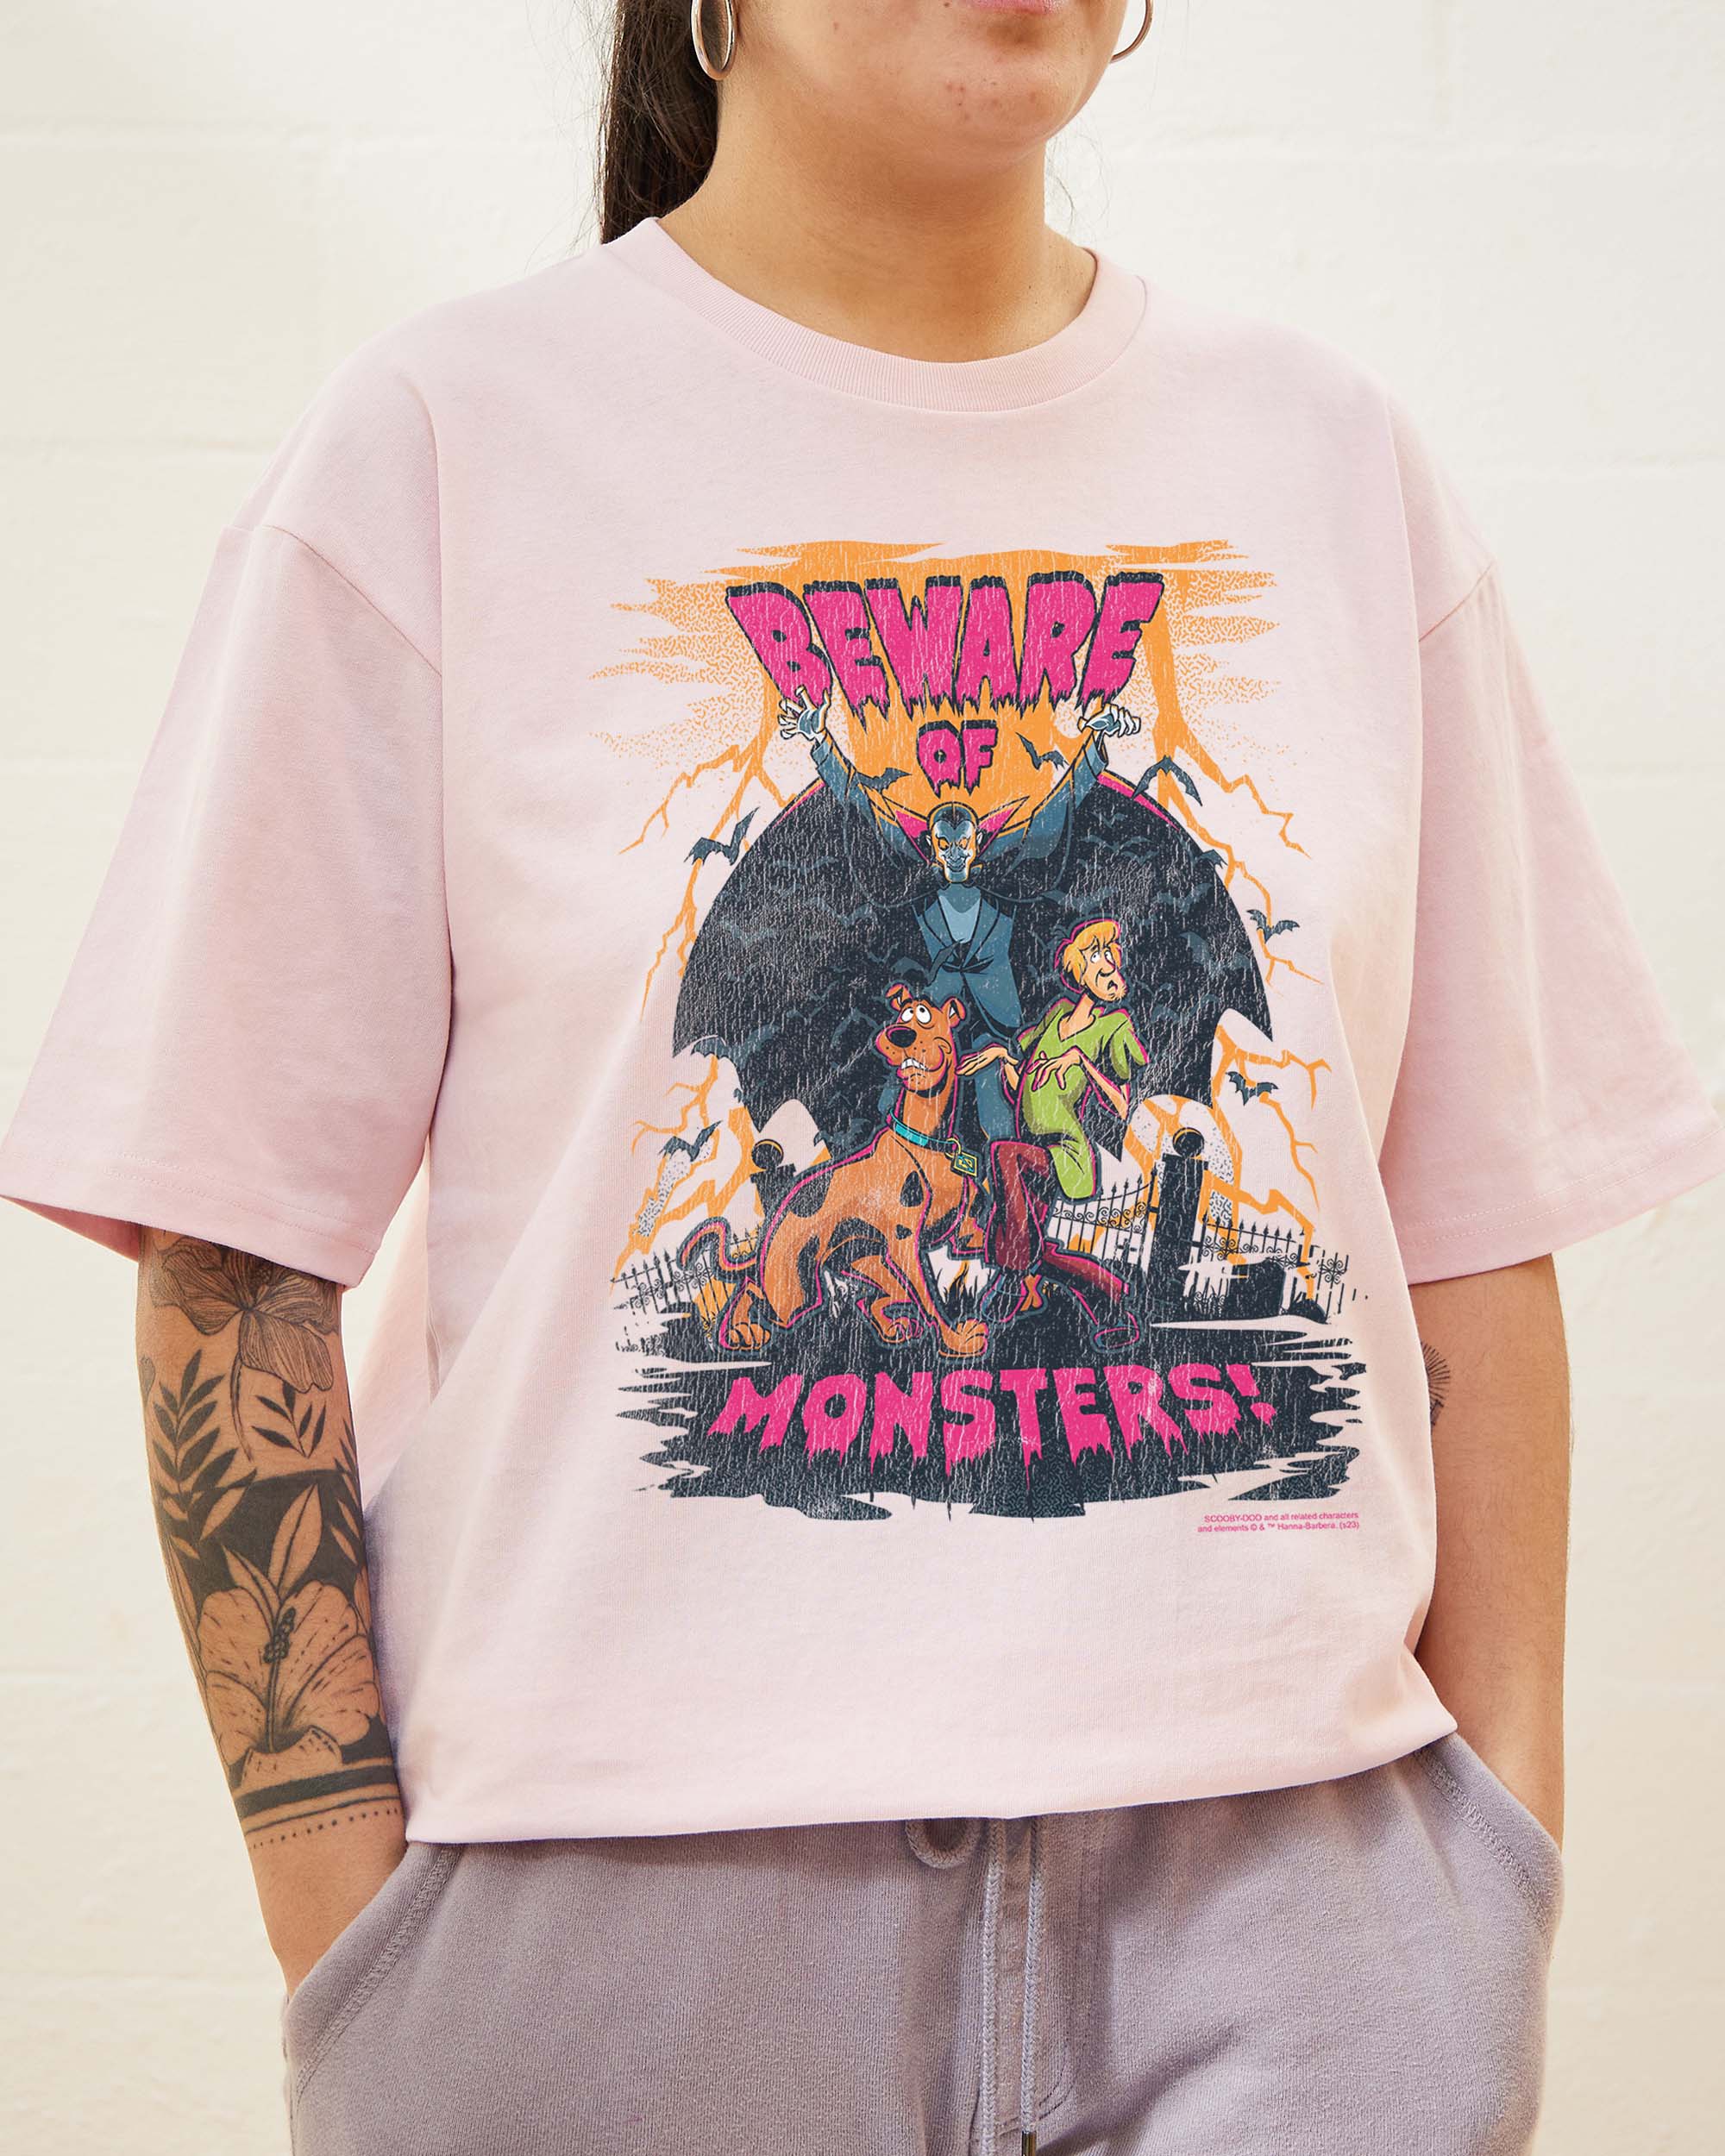 Beware of Monsters T-Shirt Australia Online Pink